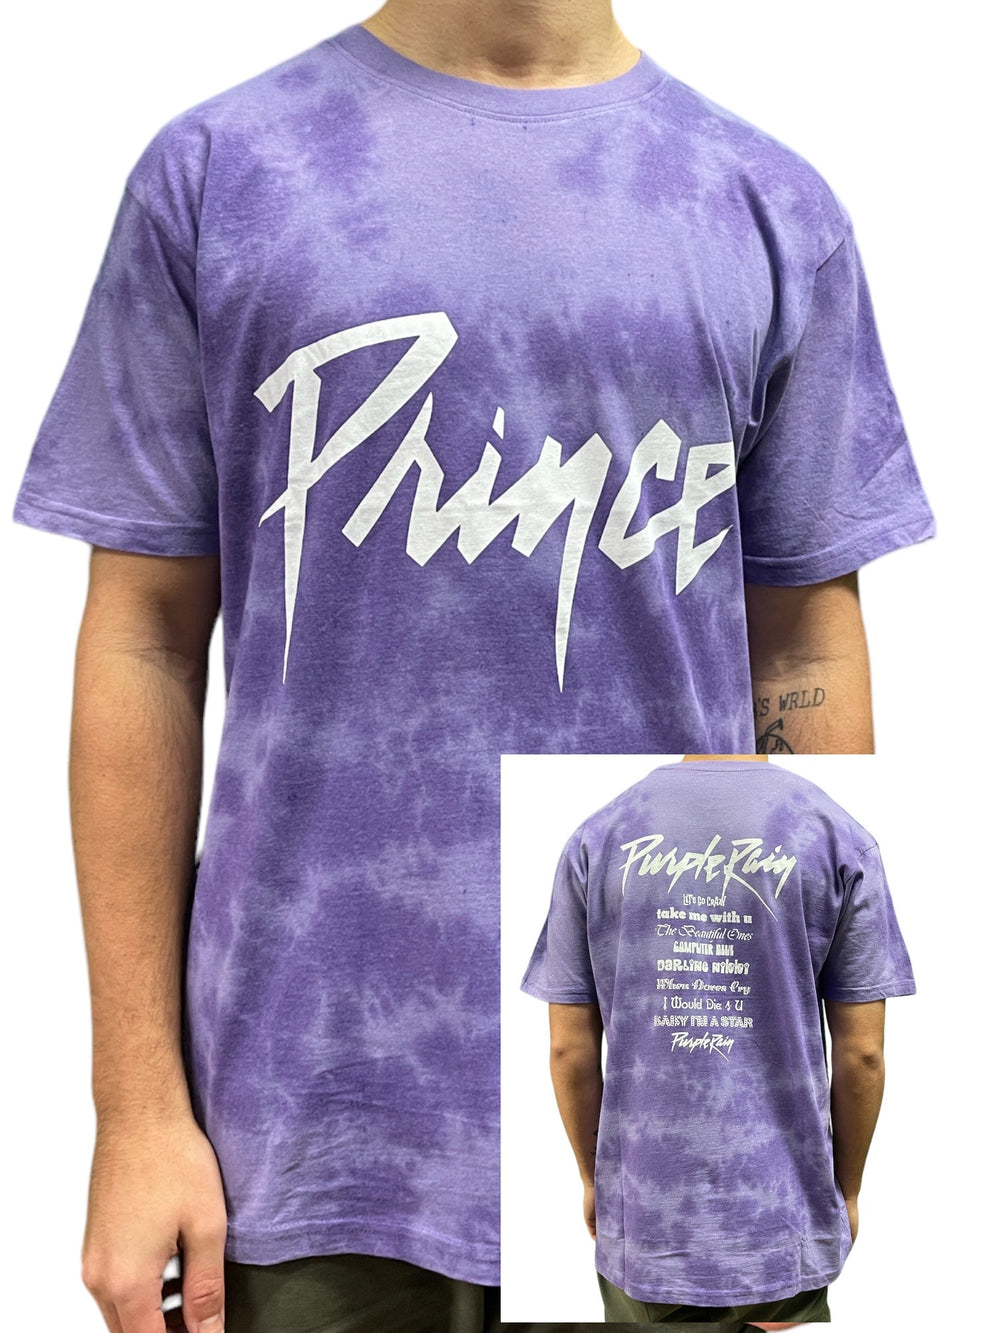 Prince – Purple Rain Track List Dip Dye Design Unisex T-Shirt Various Sizes NEW